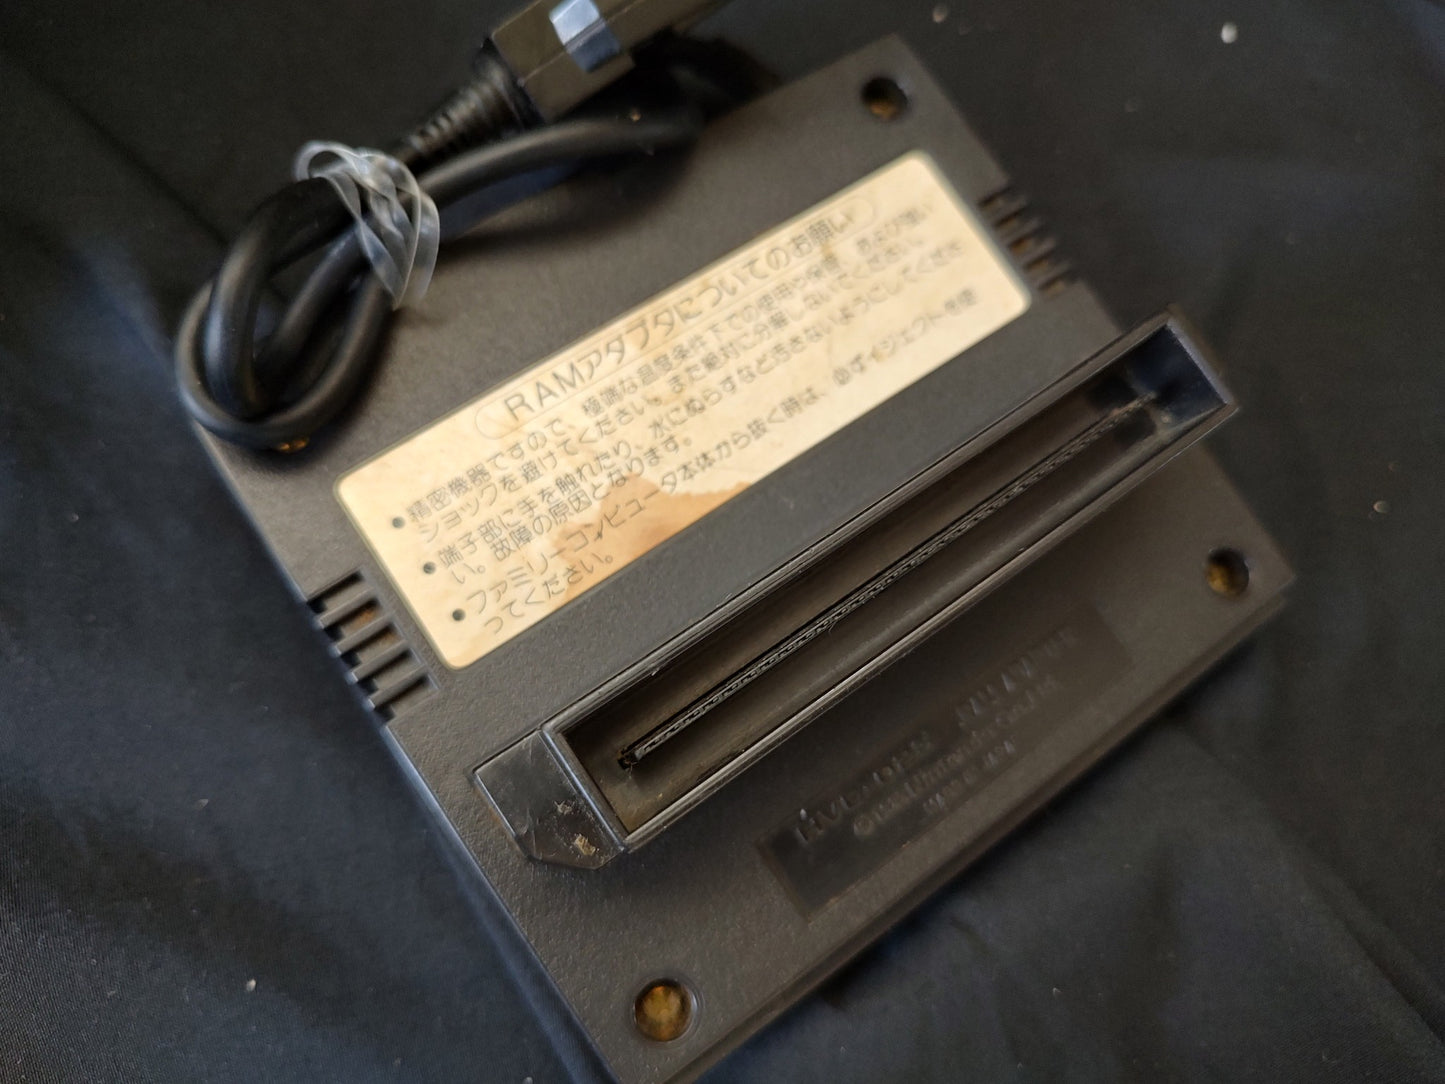 Nintendo Famicom Disk System(HVC-022) Console,RAM Adapter set, Working-f1229-2